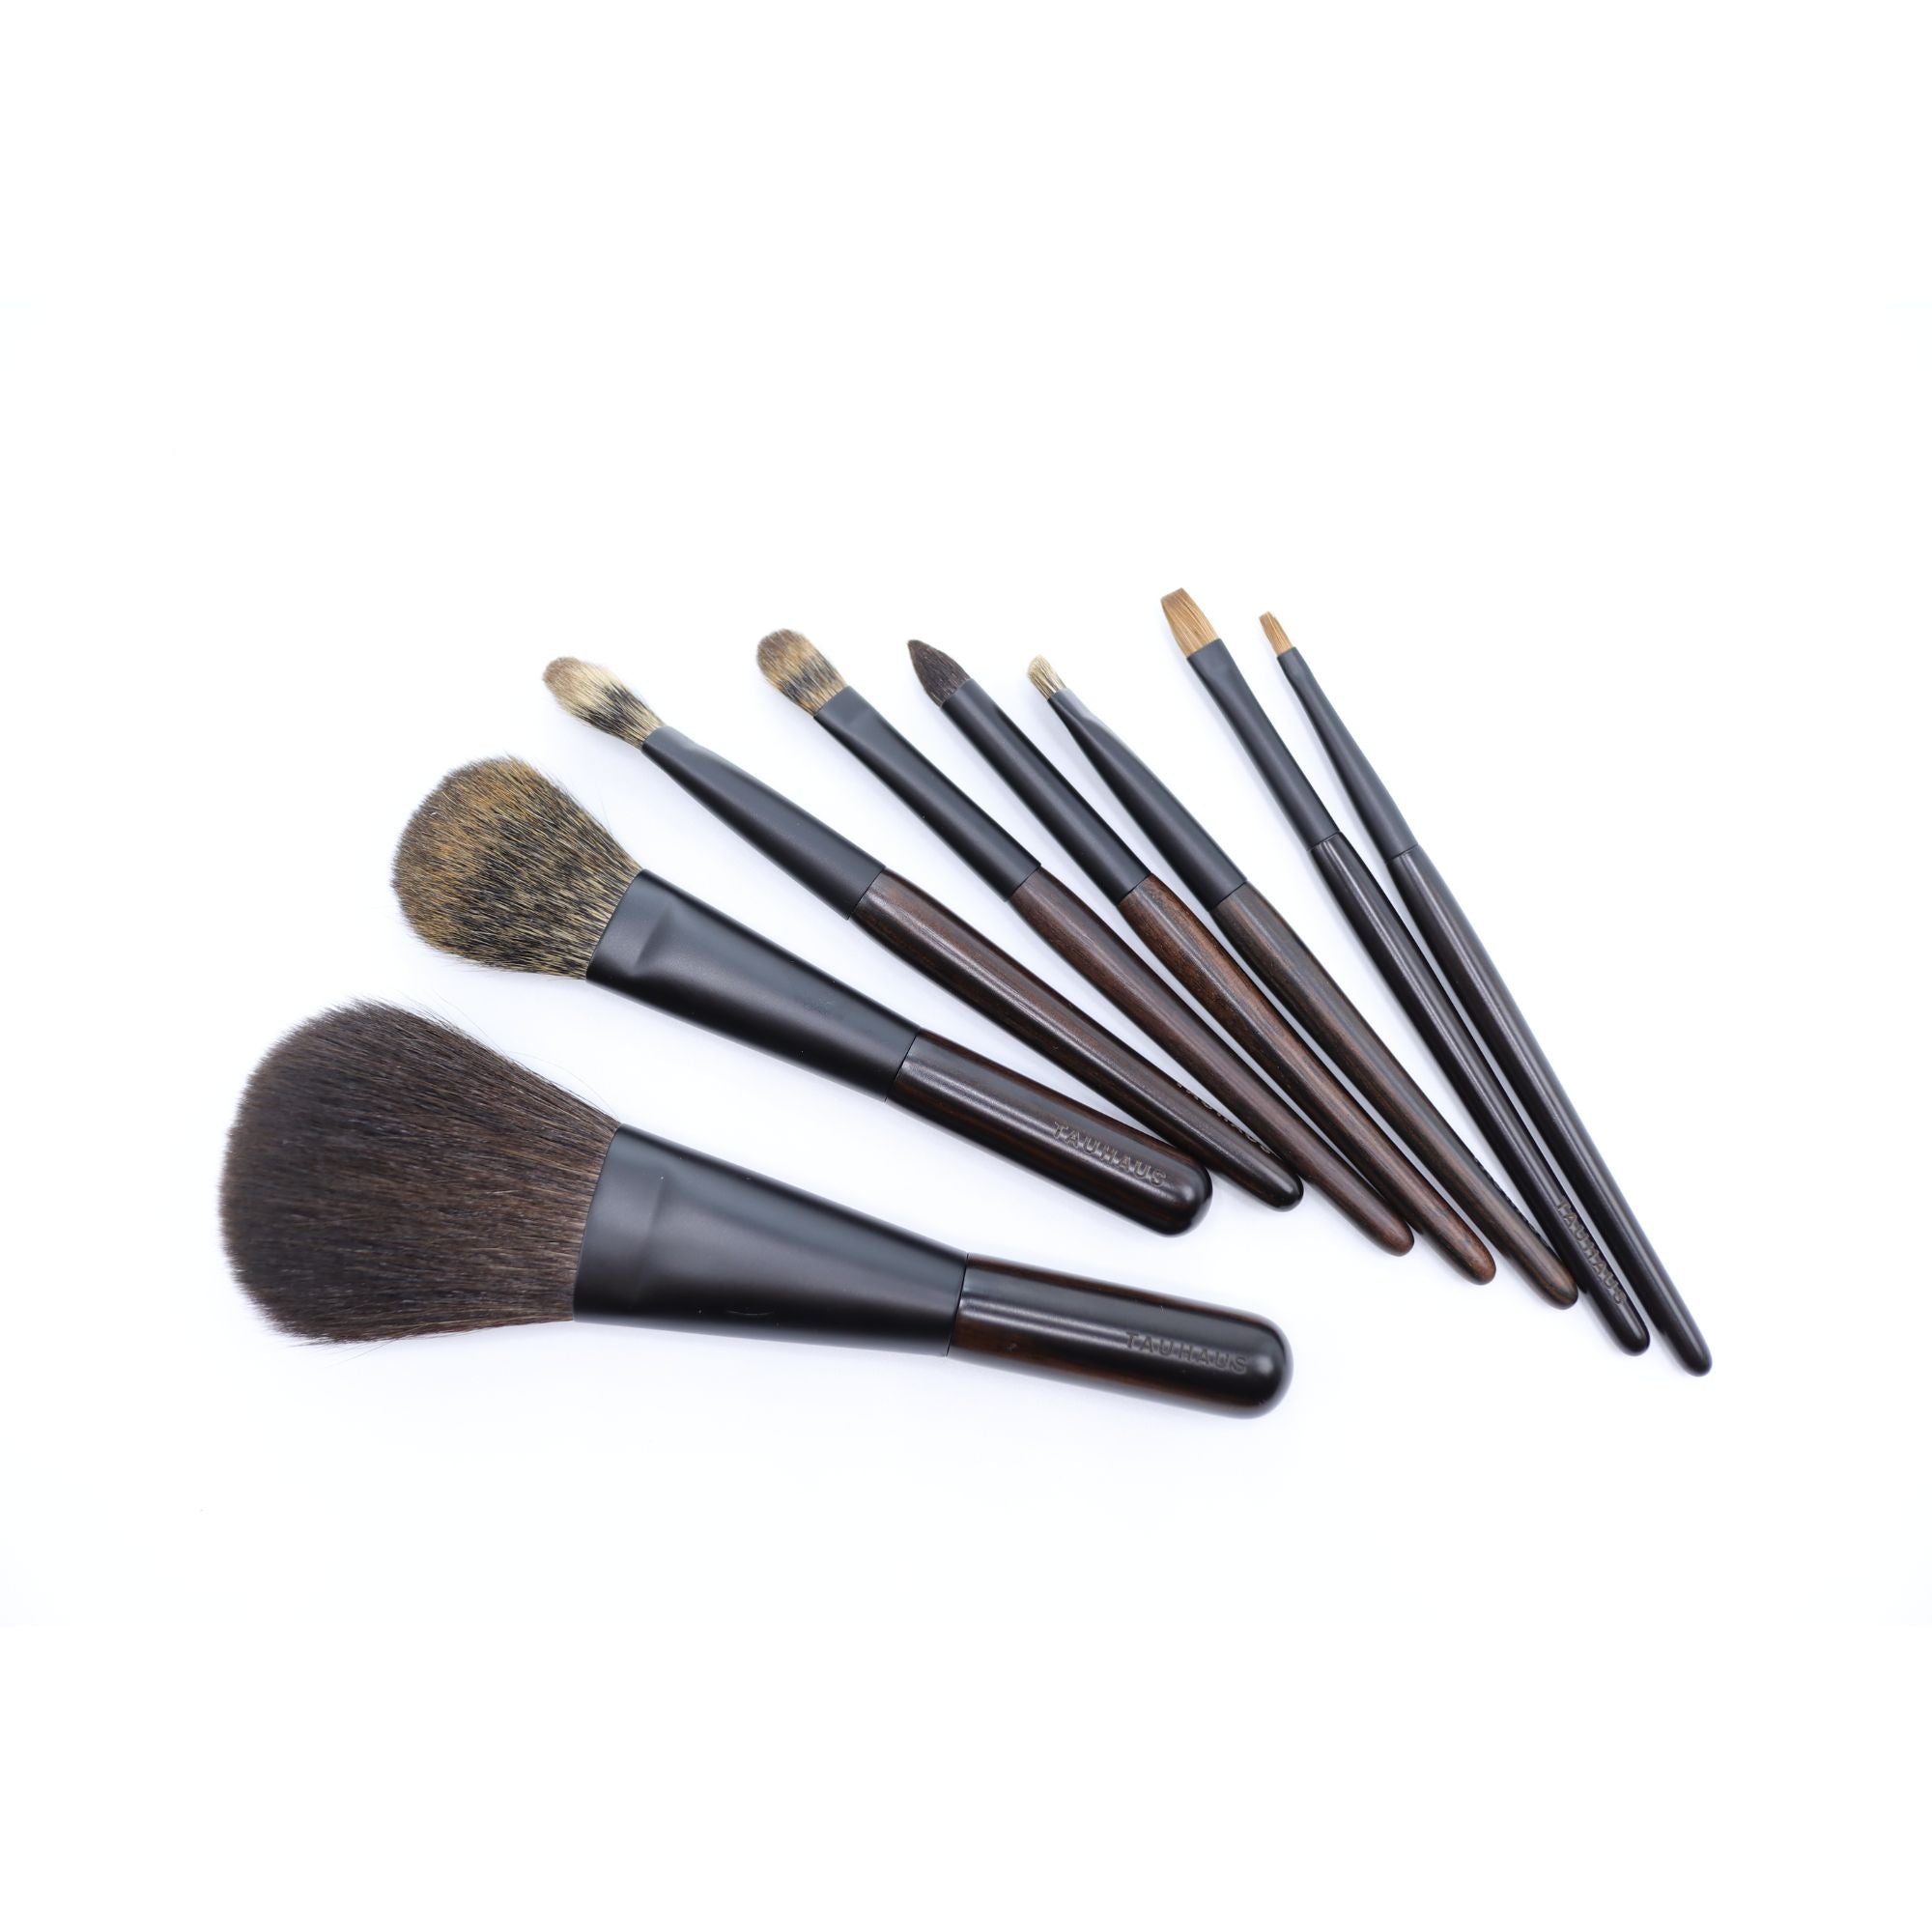 Tauhaus EH-06 Eyebrow Brush, Ode Series - Fude Beauty, Japanese Makeup Brushes